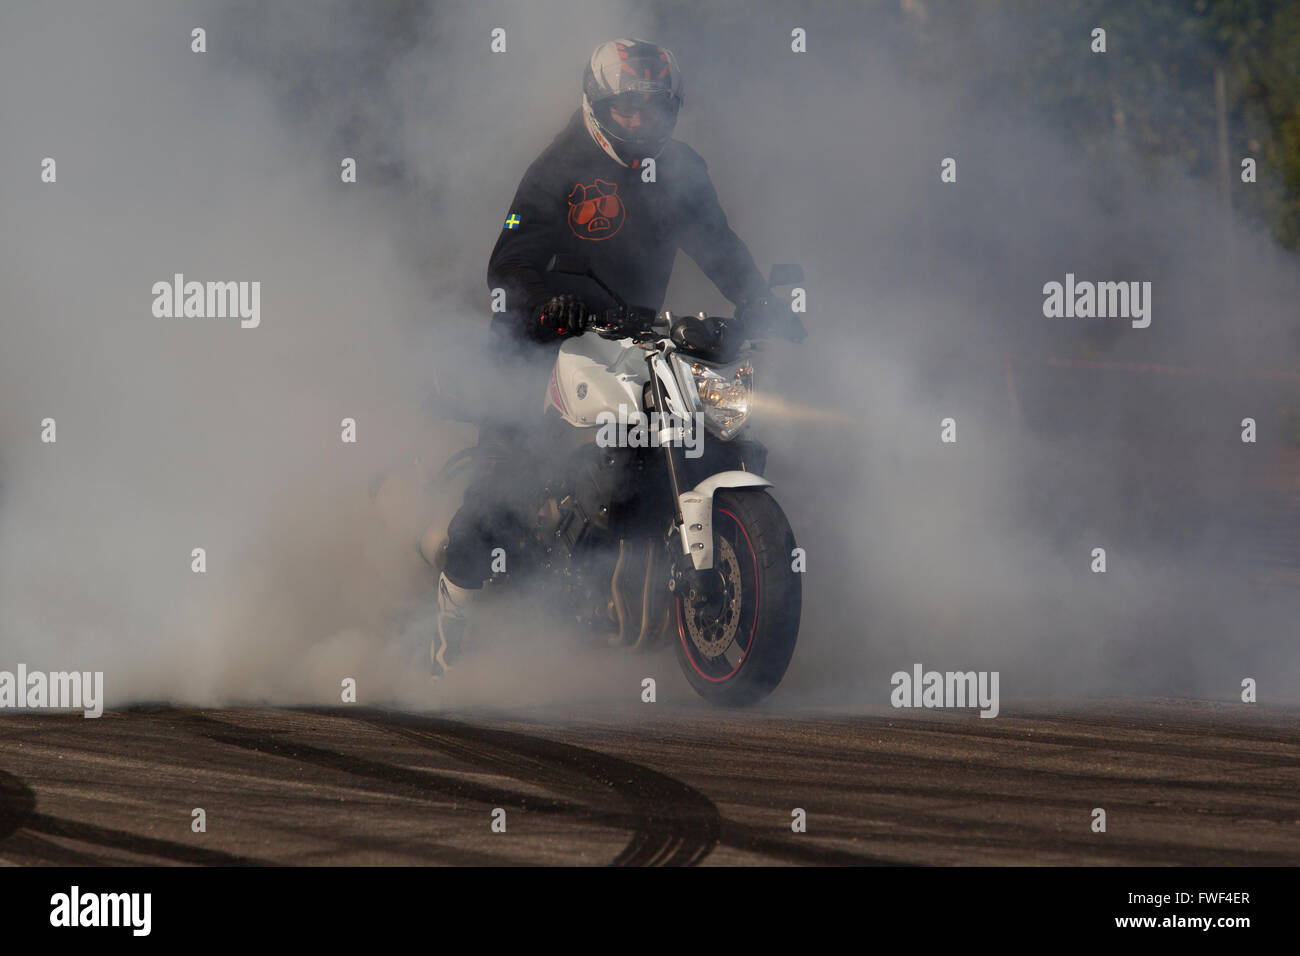 Superbike makes a very smoky burnout Stock Photo